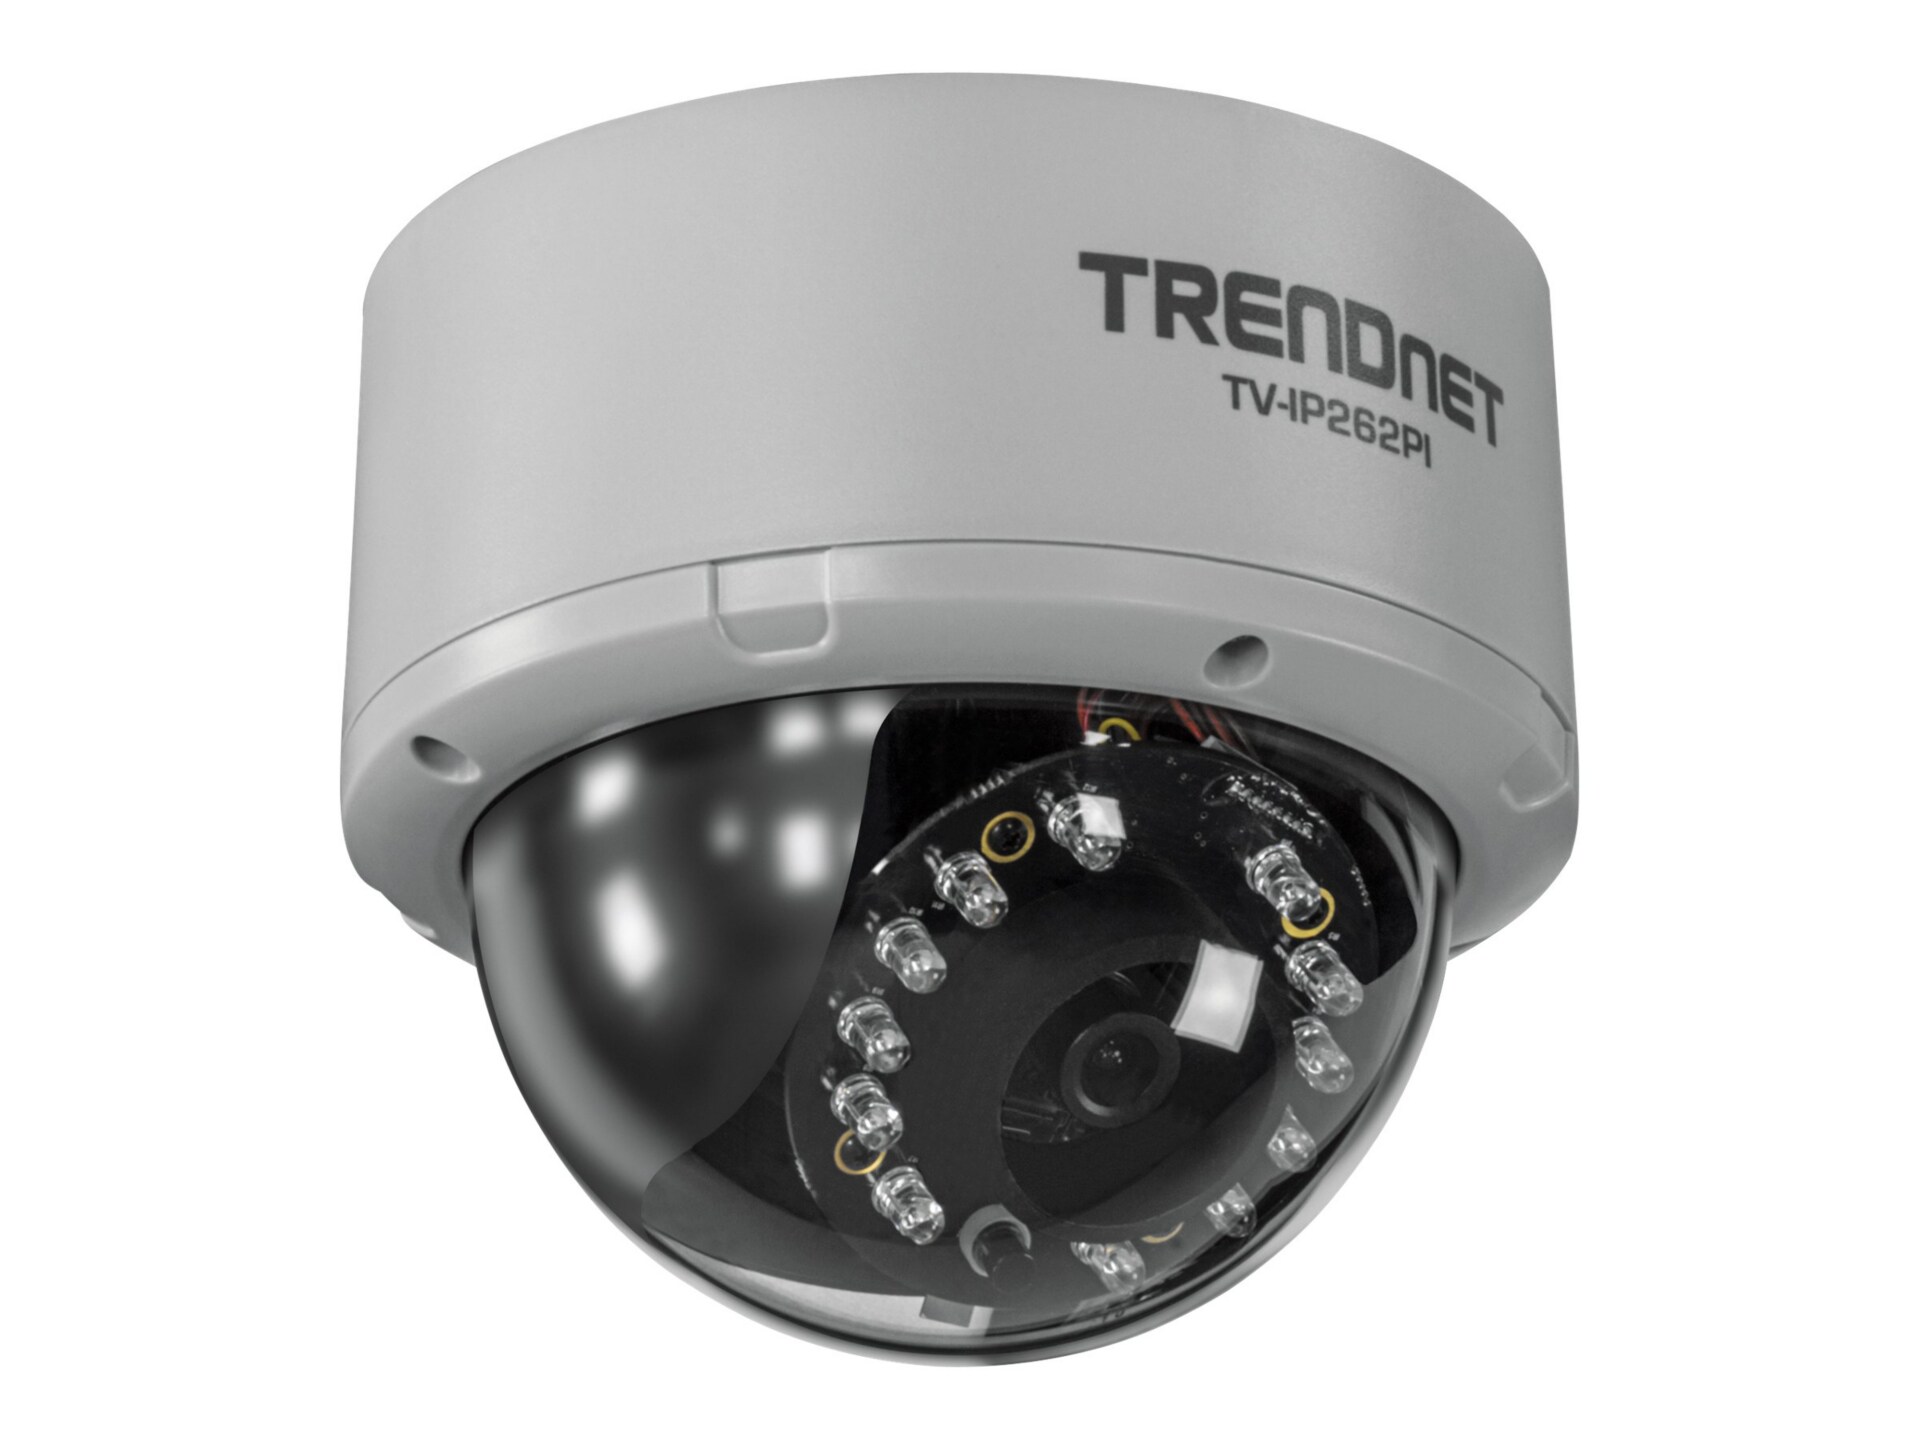 TRENDnet TV IP262PI Megapixel PoE Day / Night Dome Internet Camera - network surveillance camera